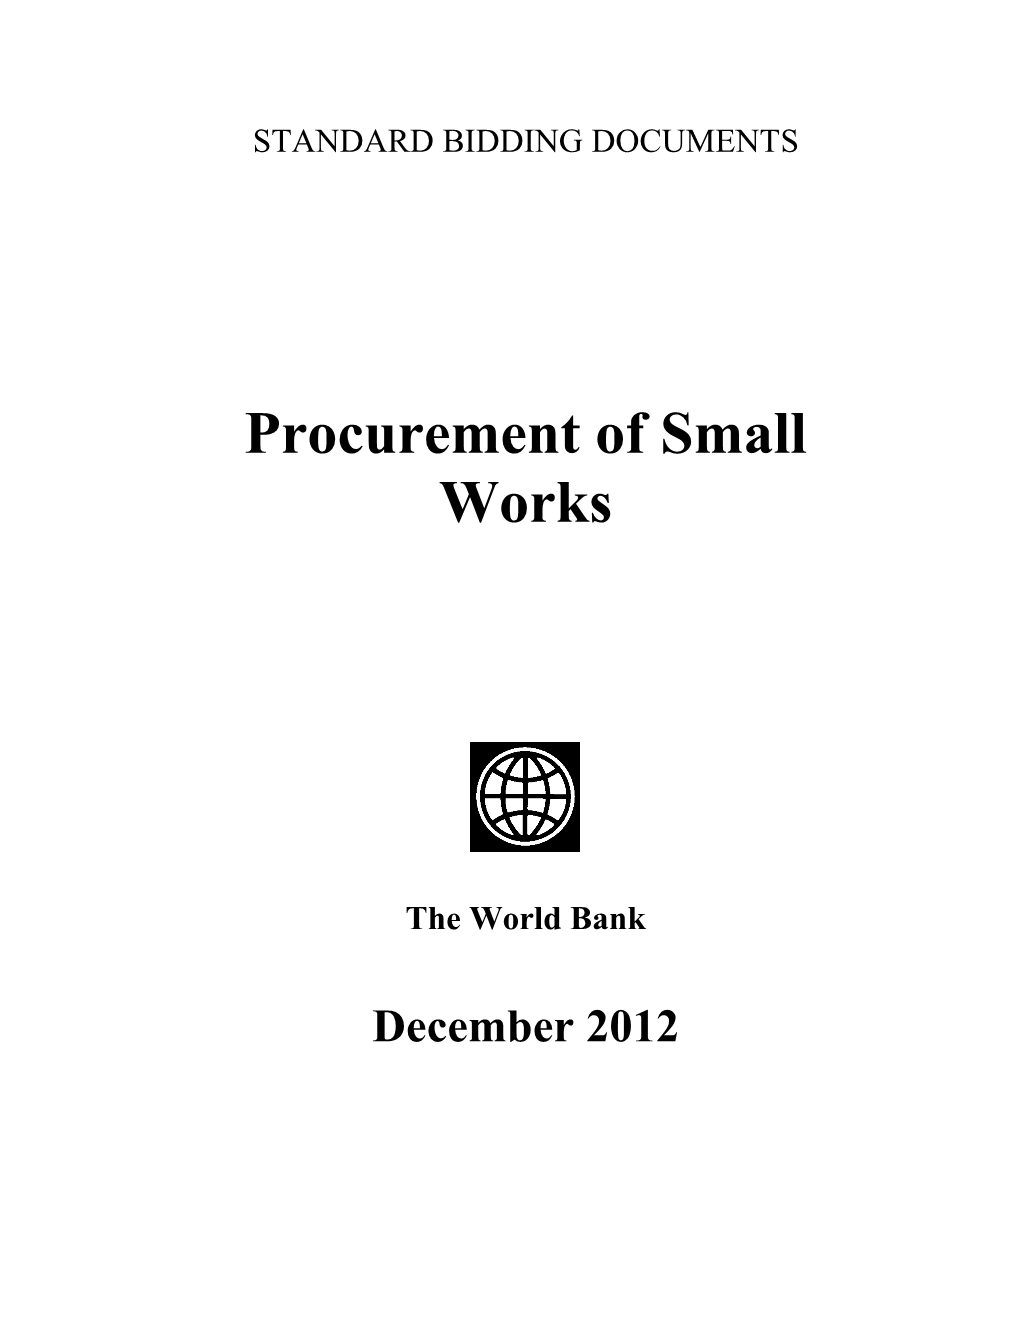 Procurement of Small Works